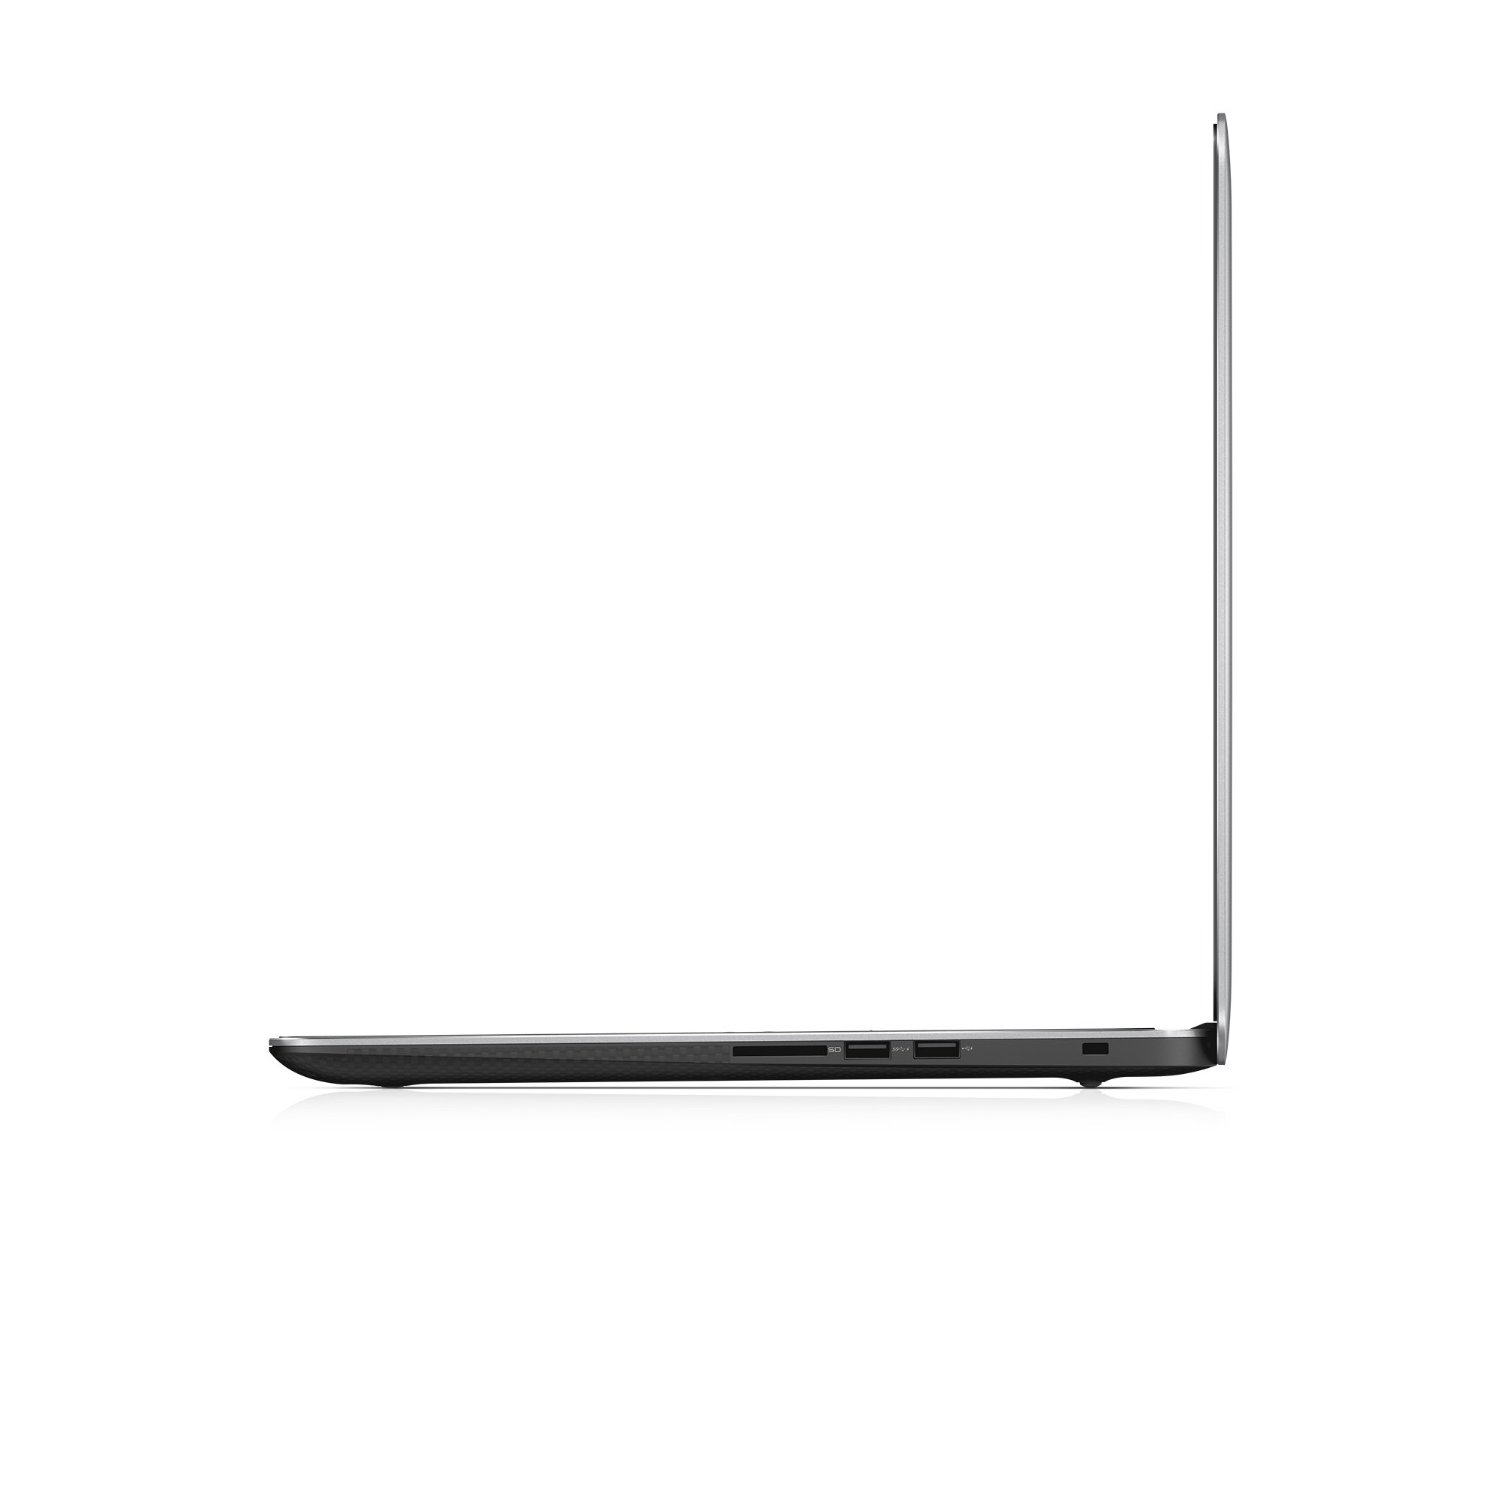 Dell XPS 15 9550-4444SLV Signature Edition Laptop